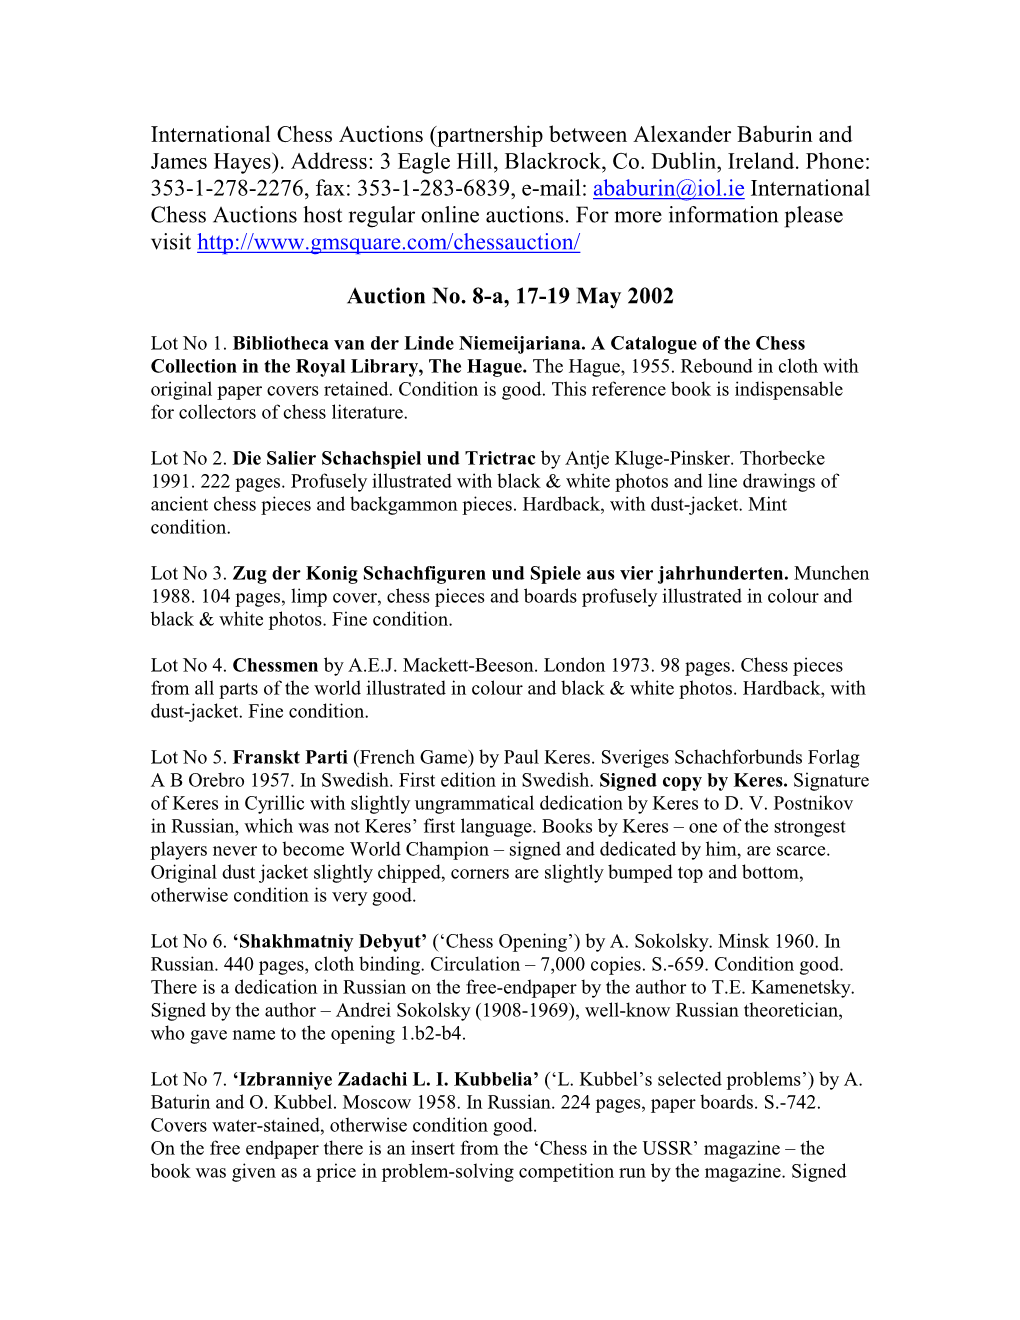 International Chess Auctions (Partnership Between Alexander Baburin and James Hayes)